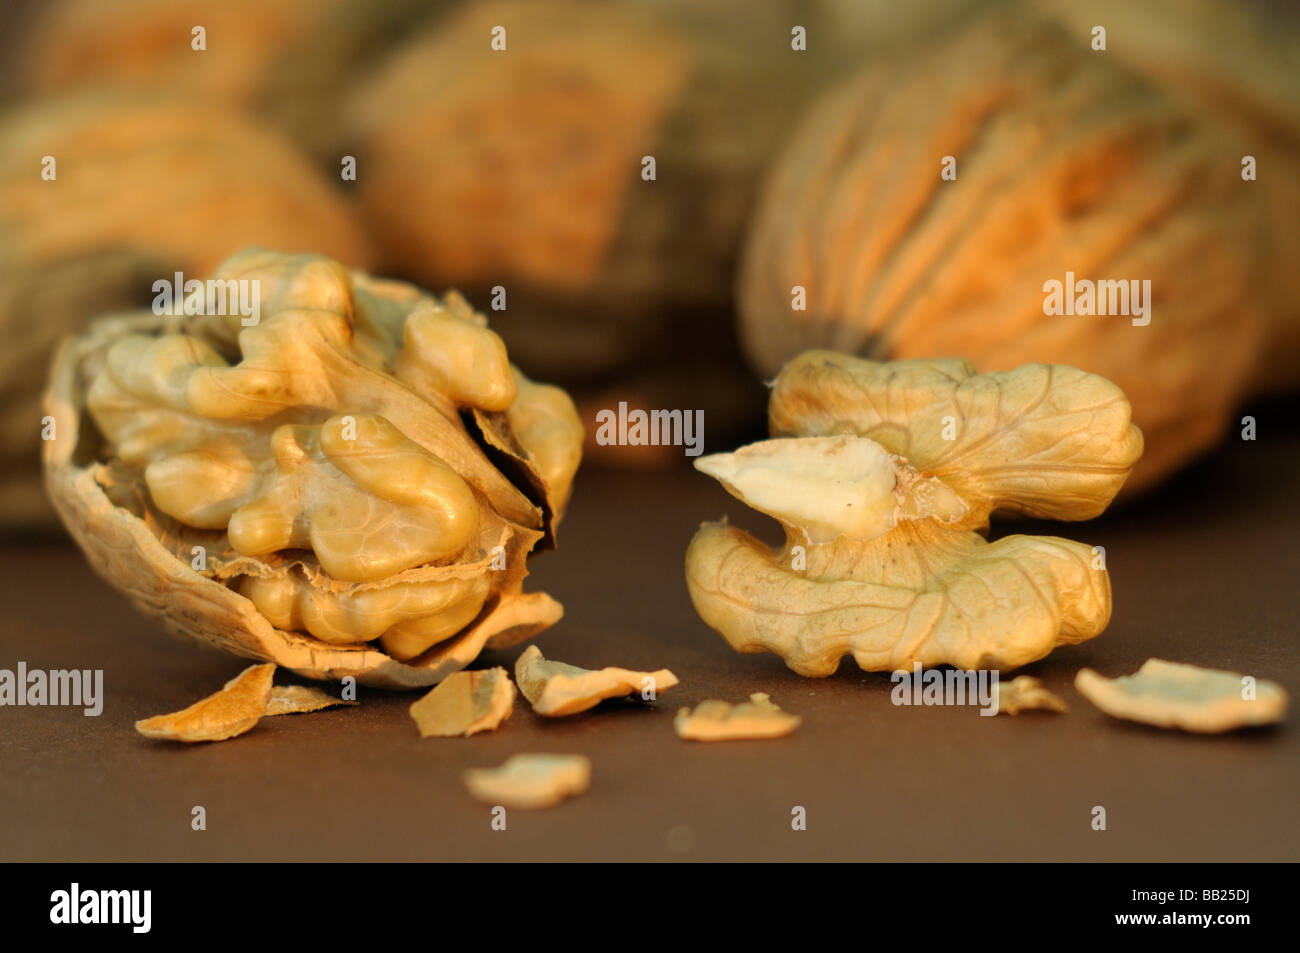 English Walnut, Persian Walnut (Juglans regia). Whole and opened nuts, studio picture Stock Photo